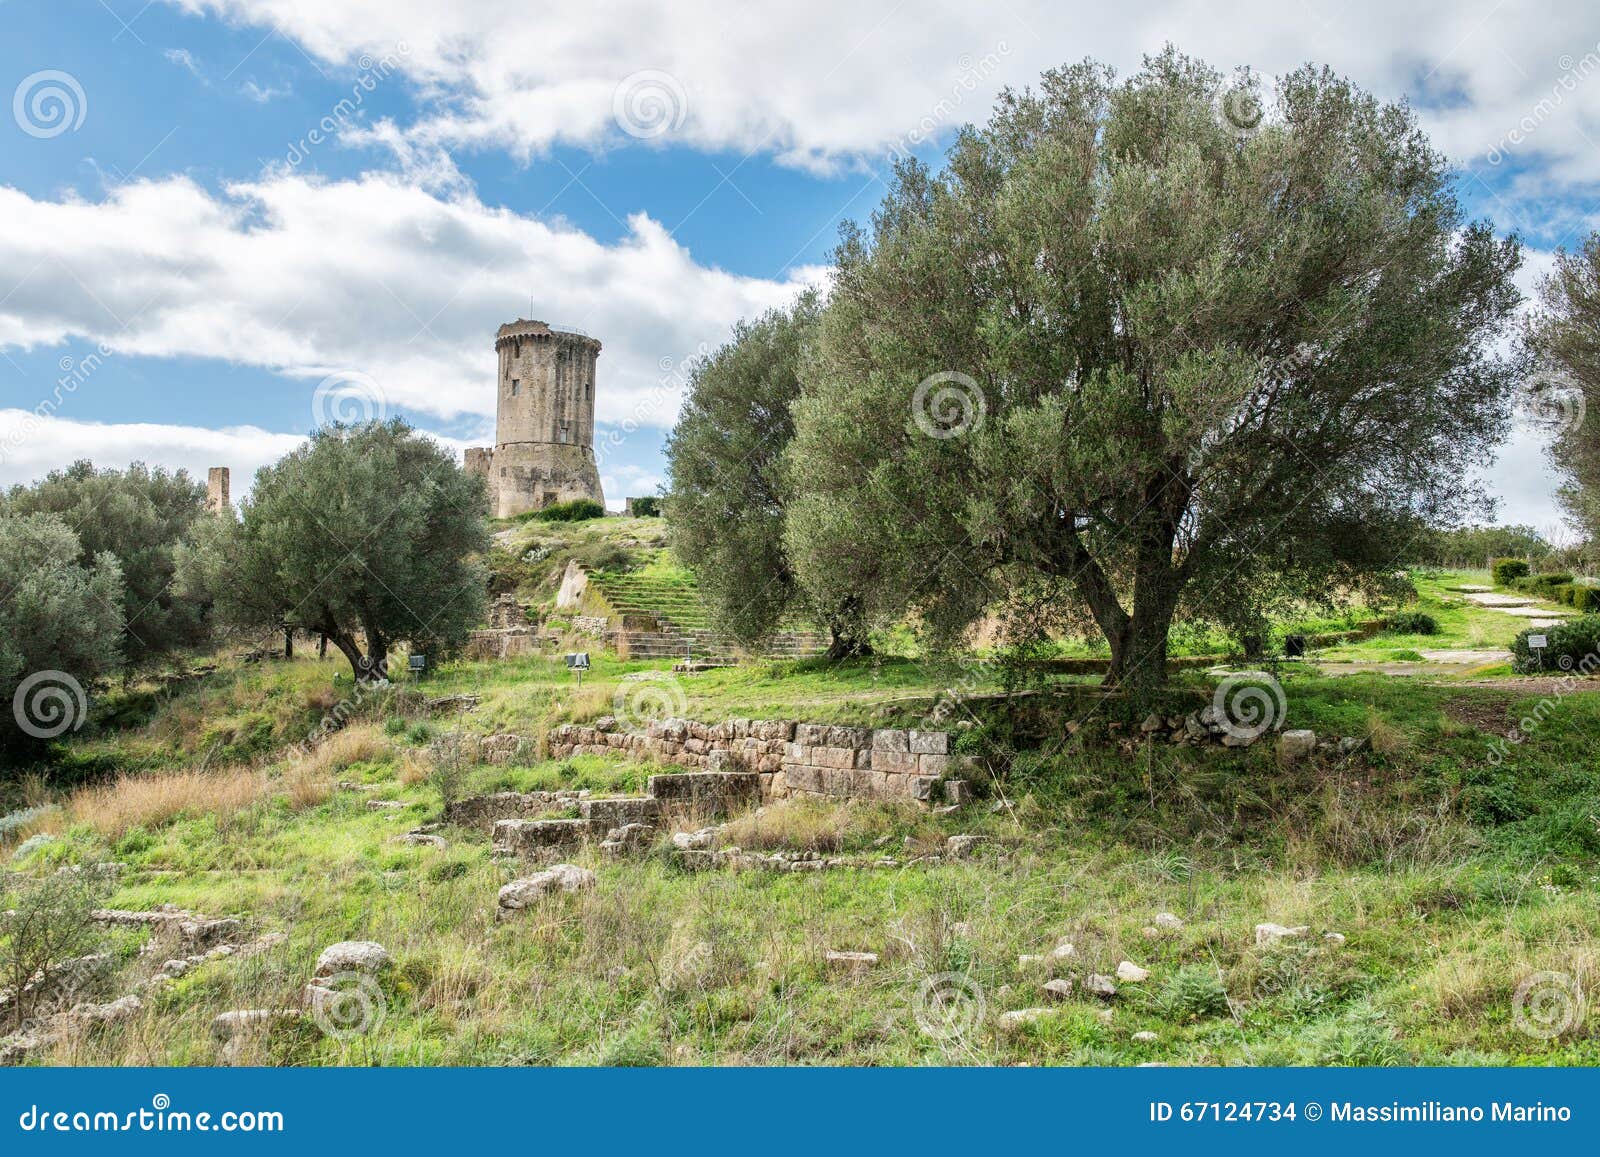 elea velia in roman times, is an ancient city of magna grecia